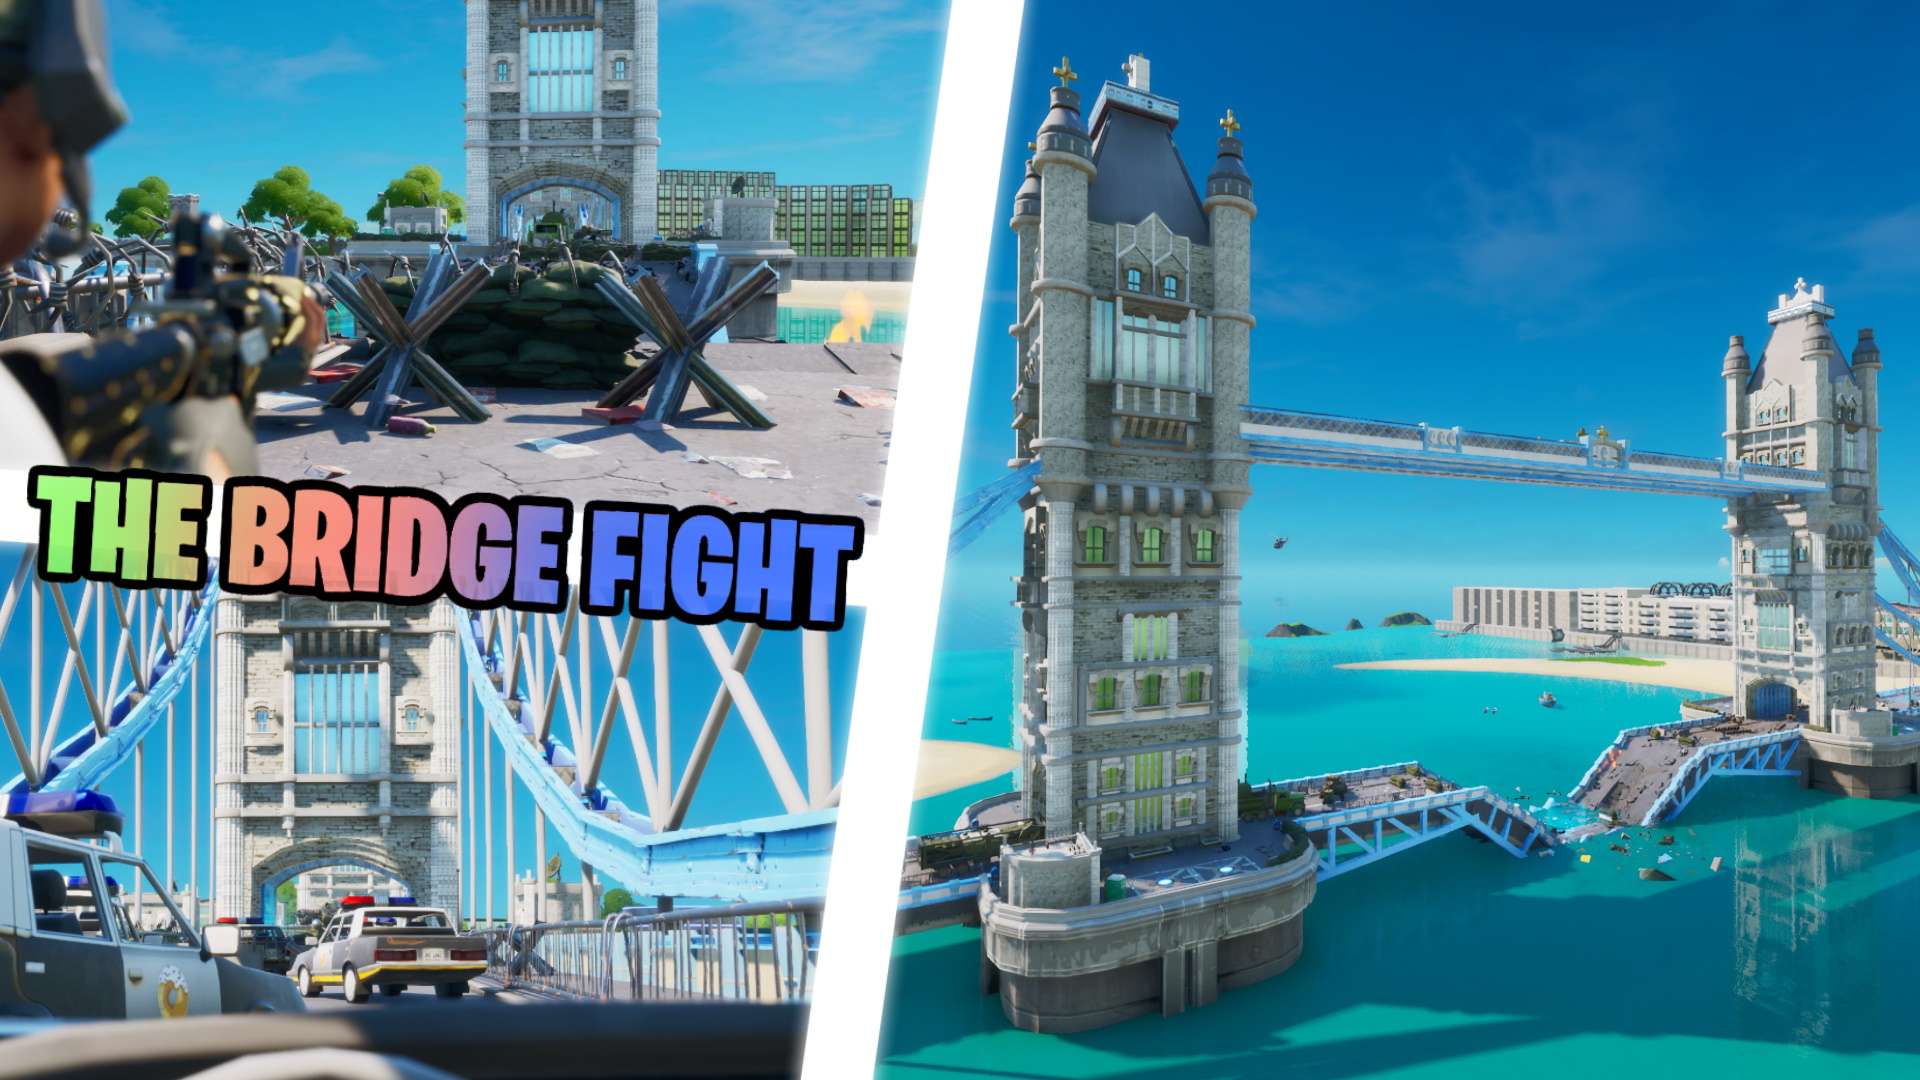 THE BRIDGE FIGHT